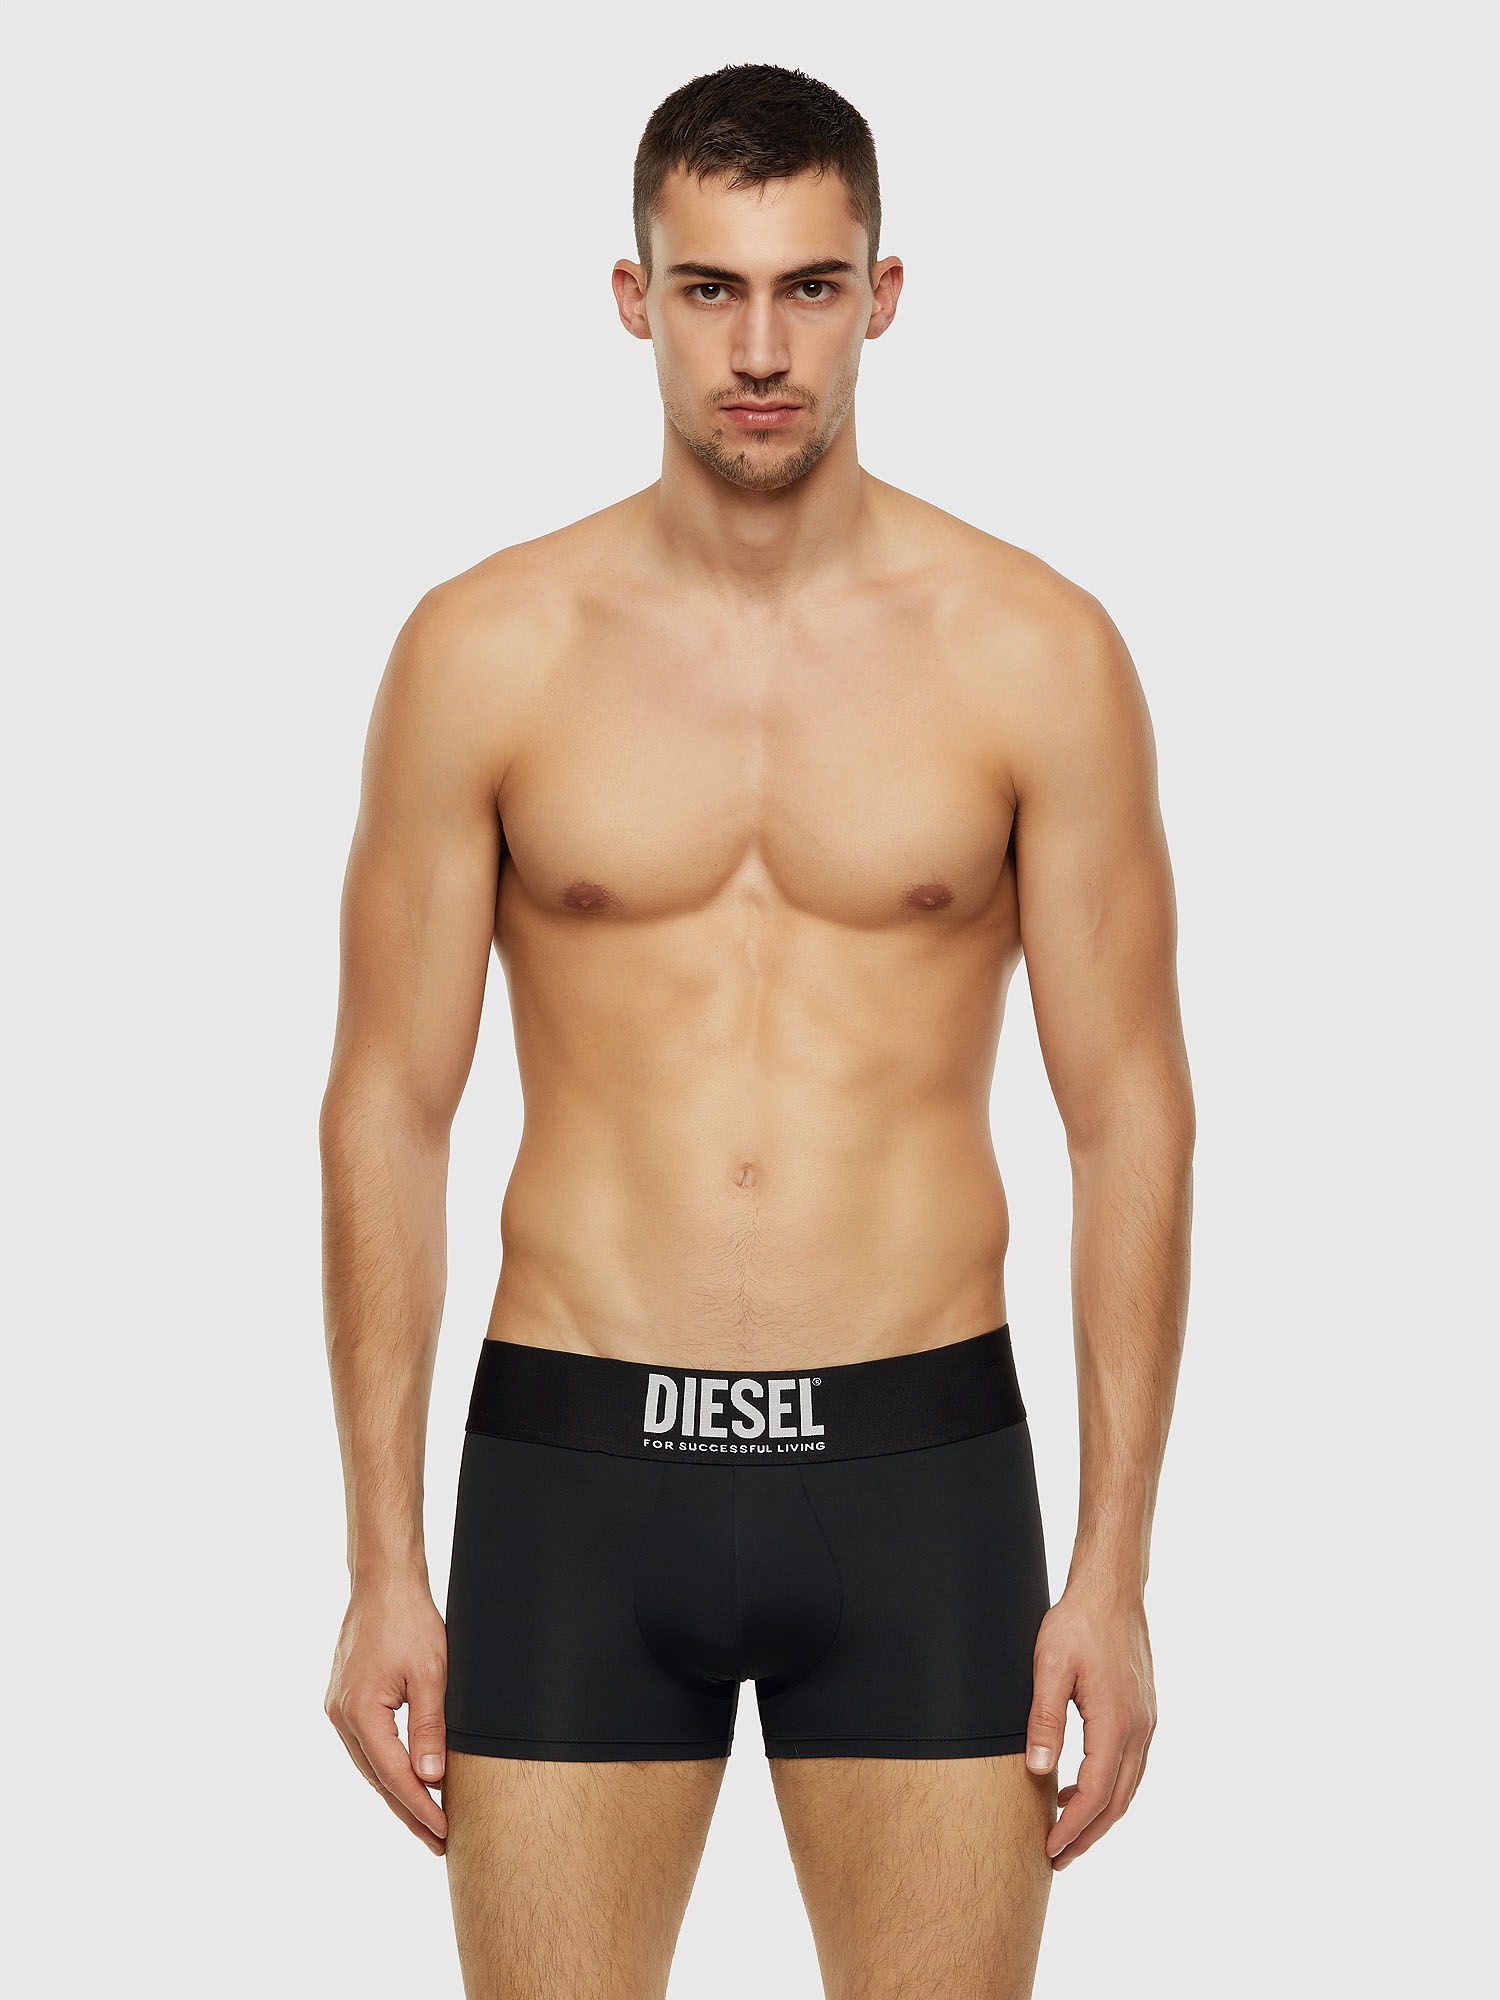 Diesel, Underwear & Socks, Diesel Black Boxer Briefs Size S Quantity 8